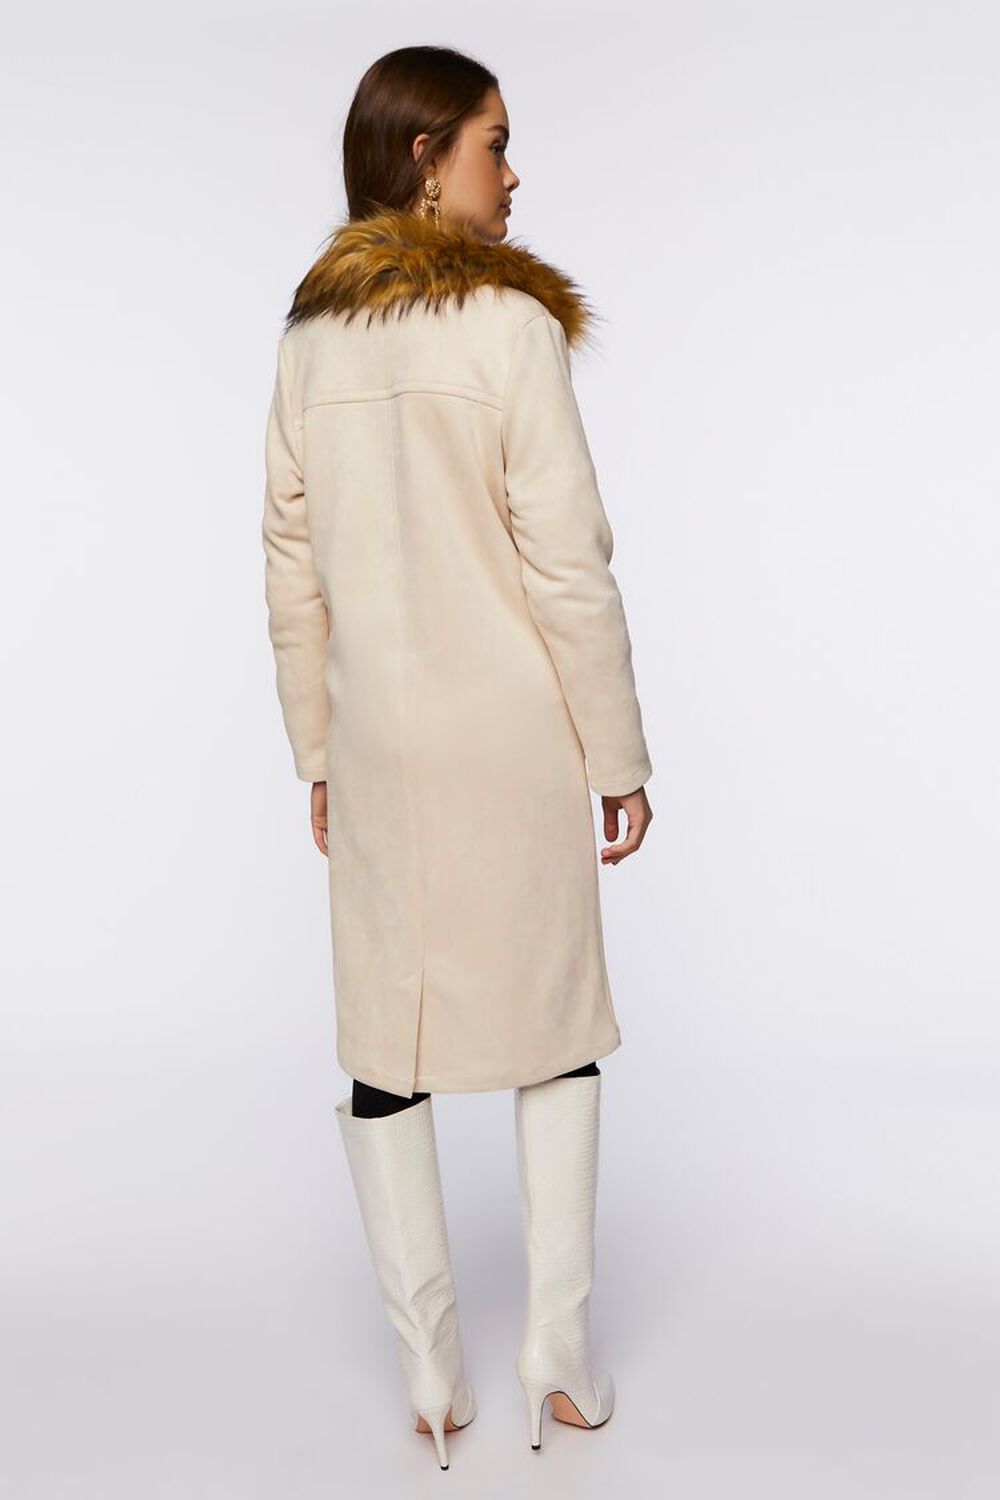 SAND/MULTI Faux Suede & Fur Longline Coat, image 3